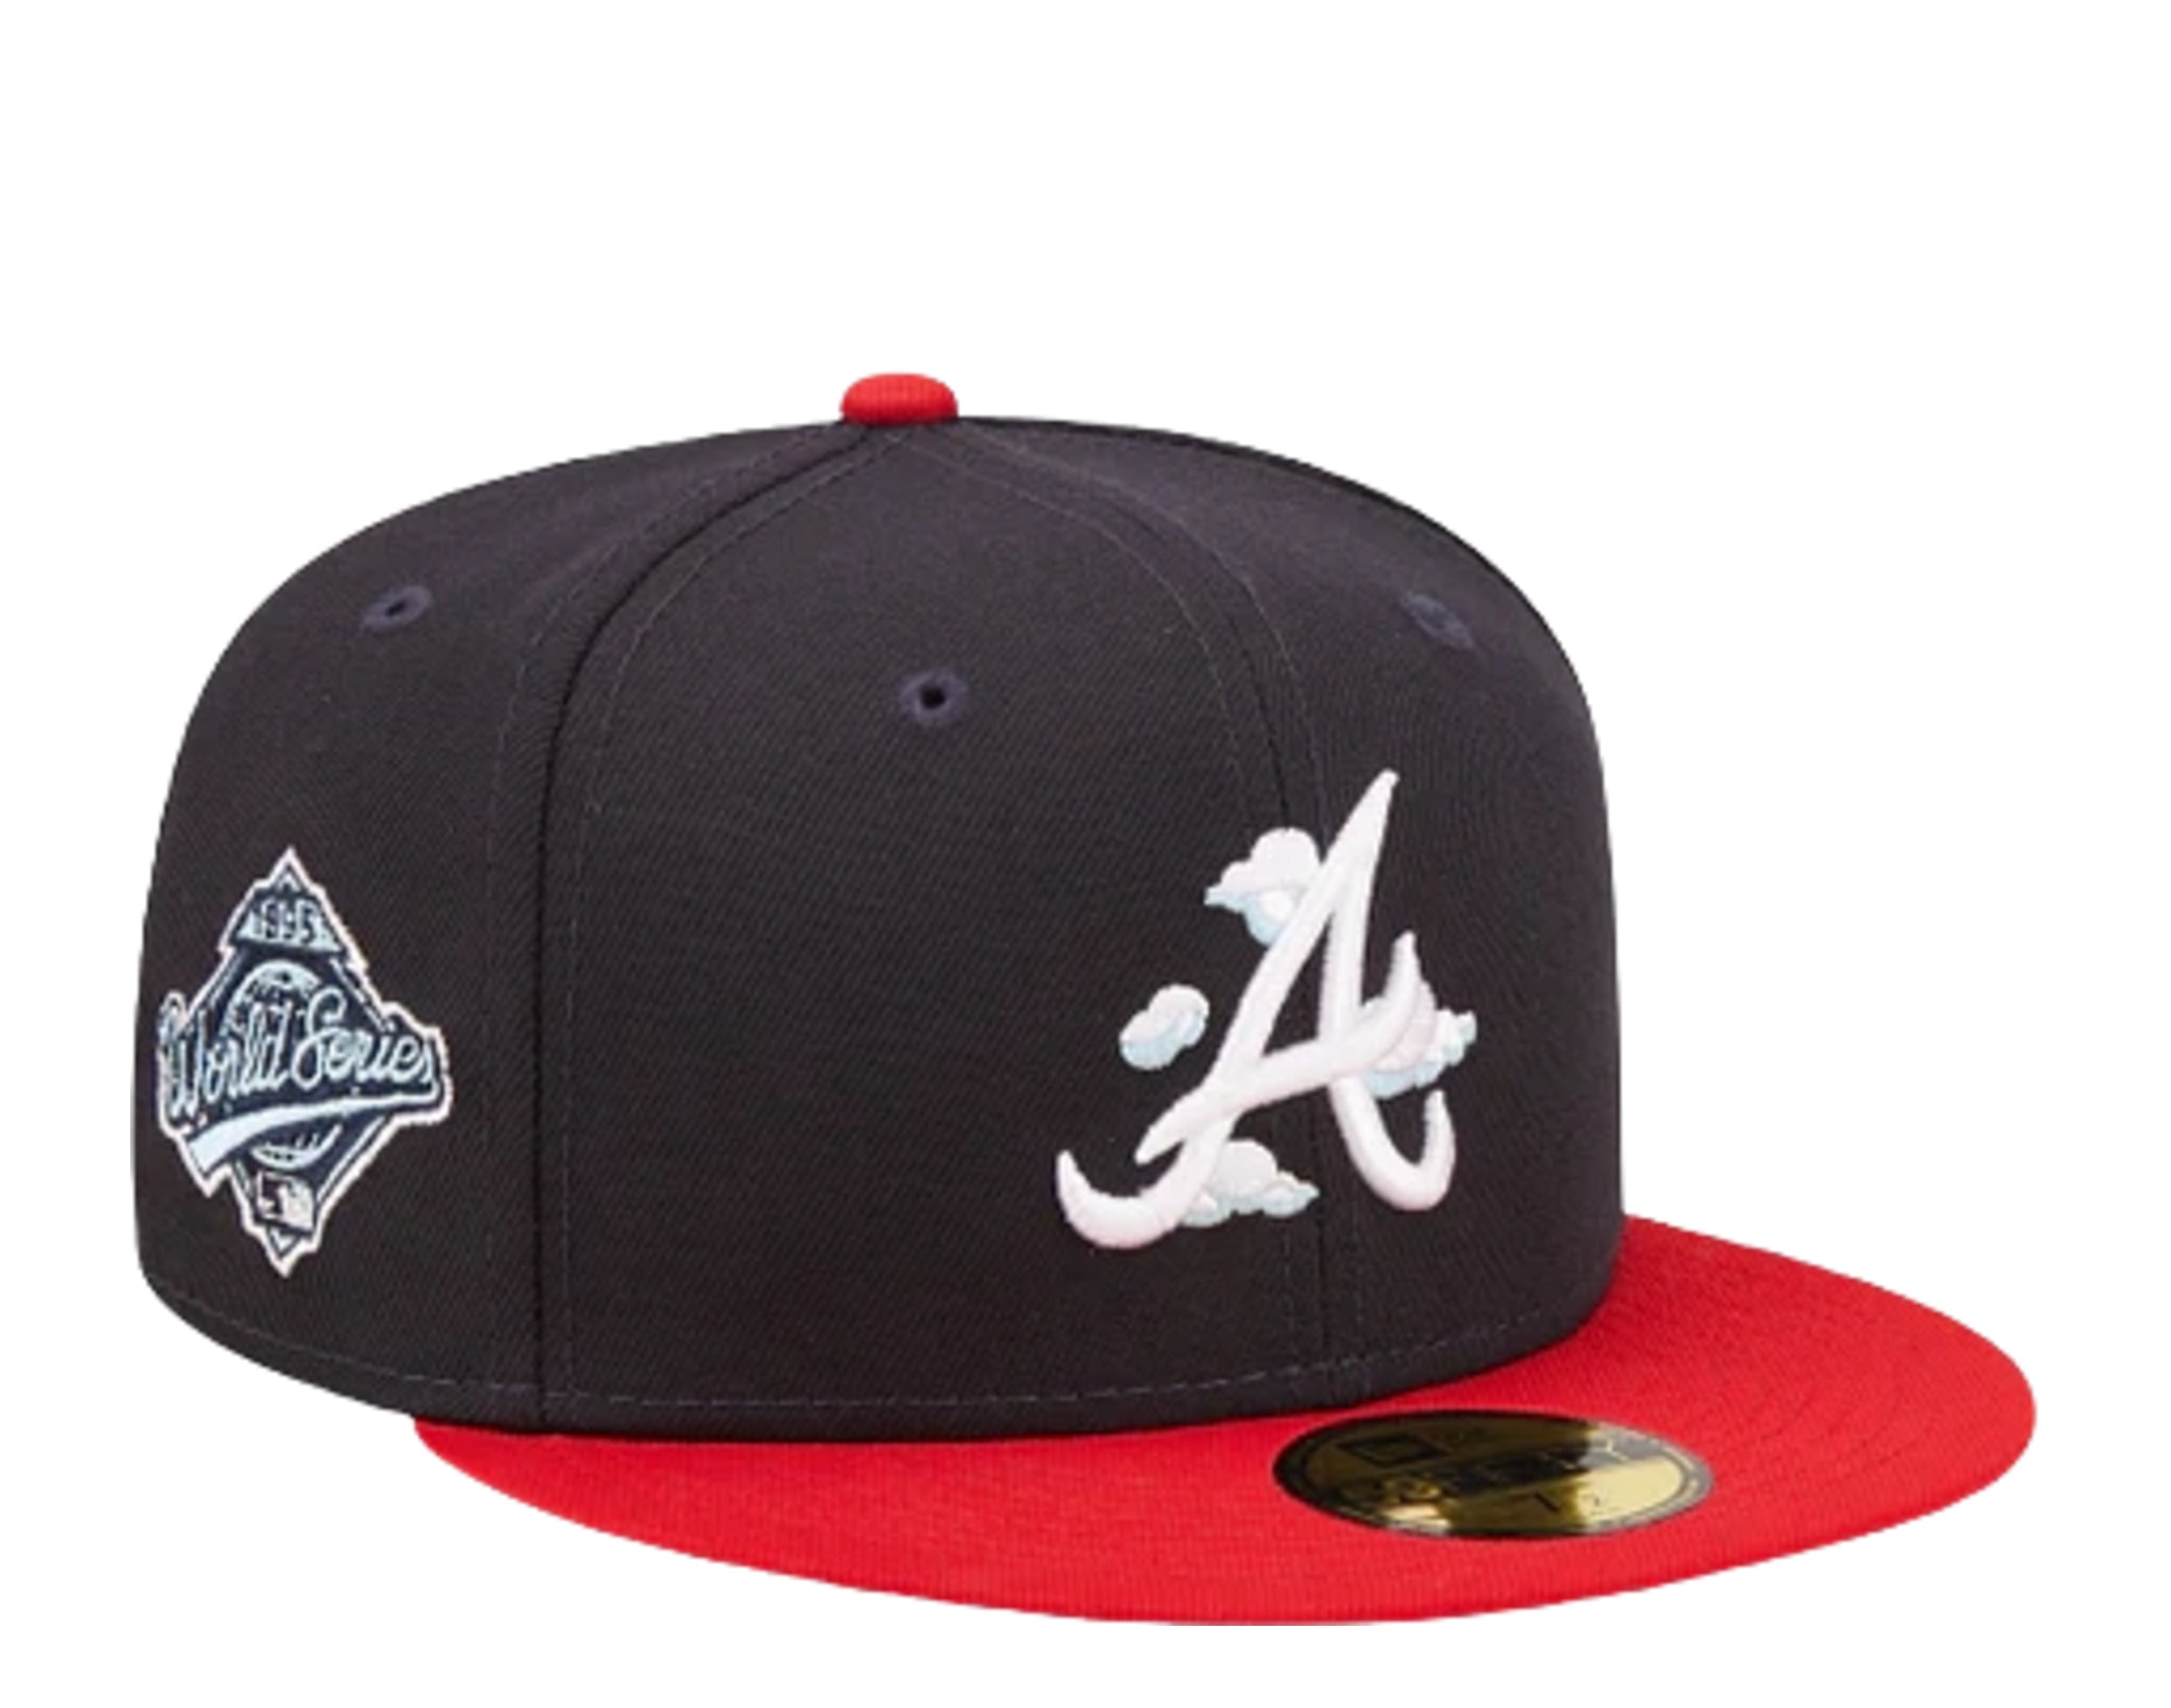 New Era Atlanta Braves Baseball Cap, Black & Red w/ Embroidered